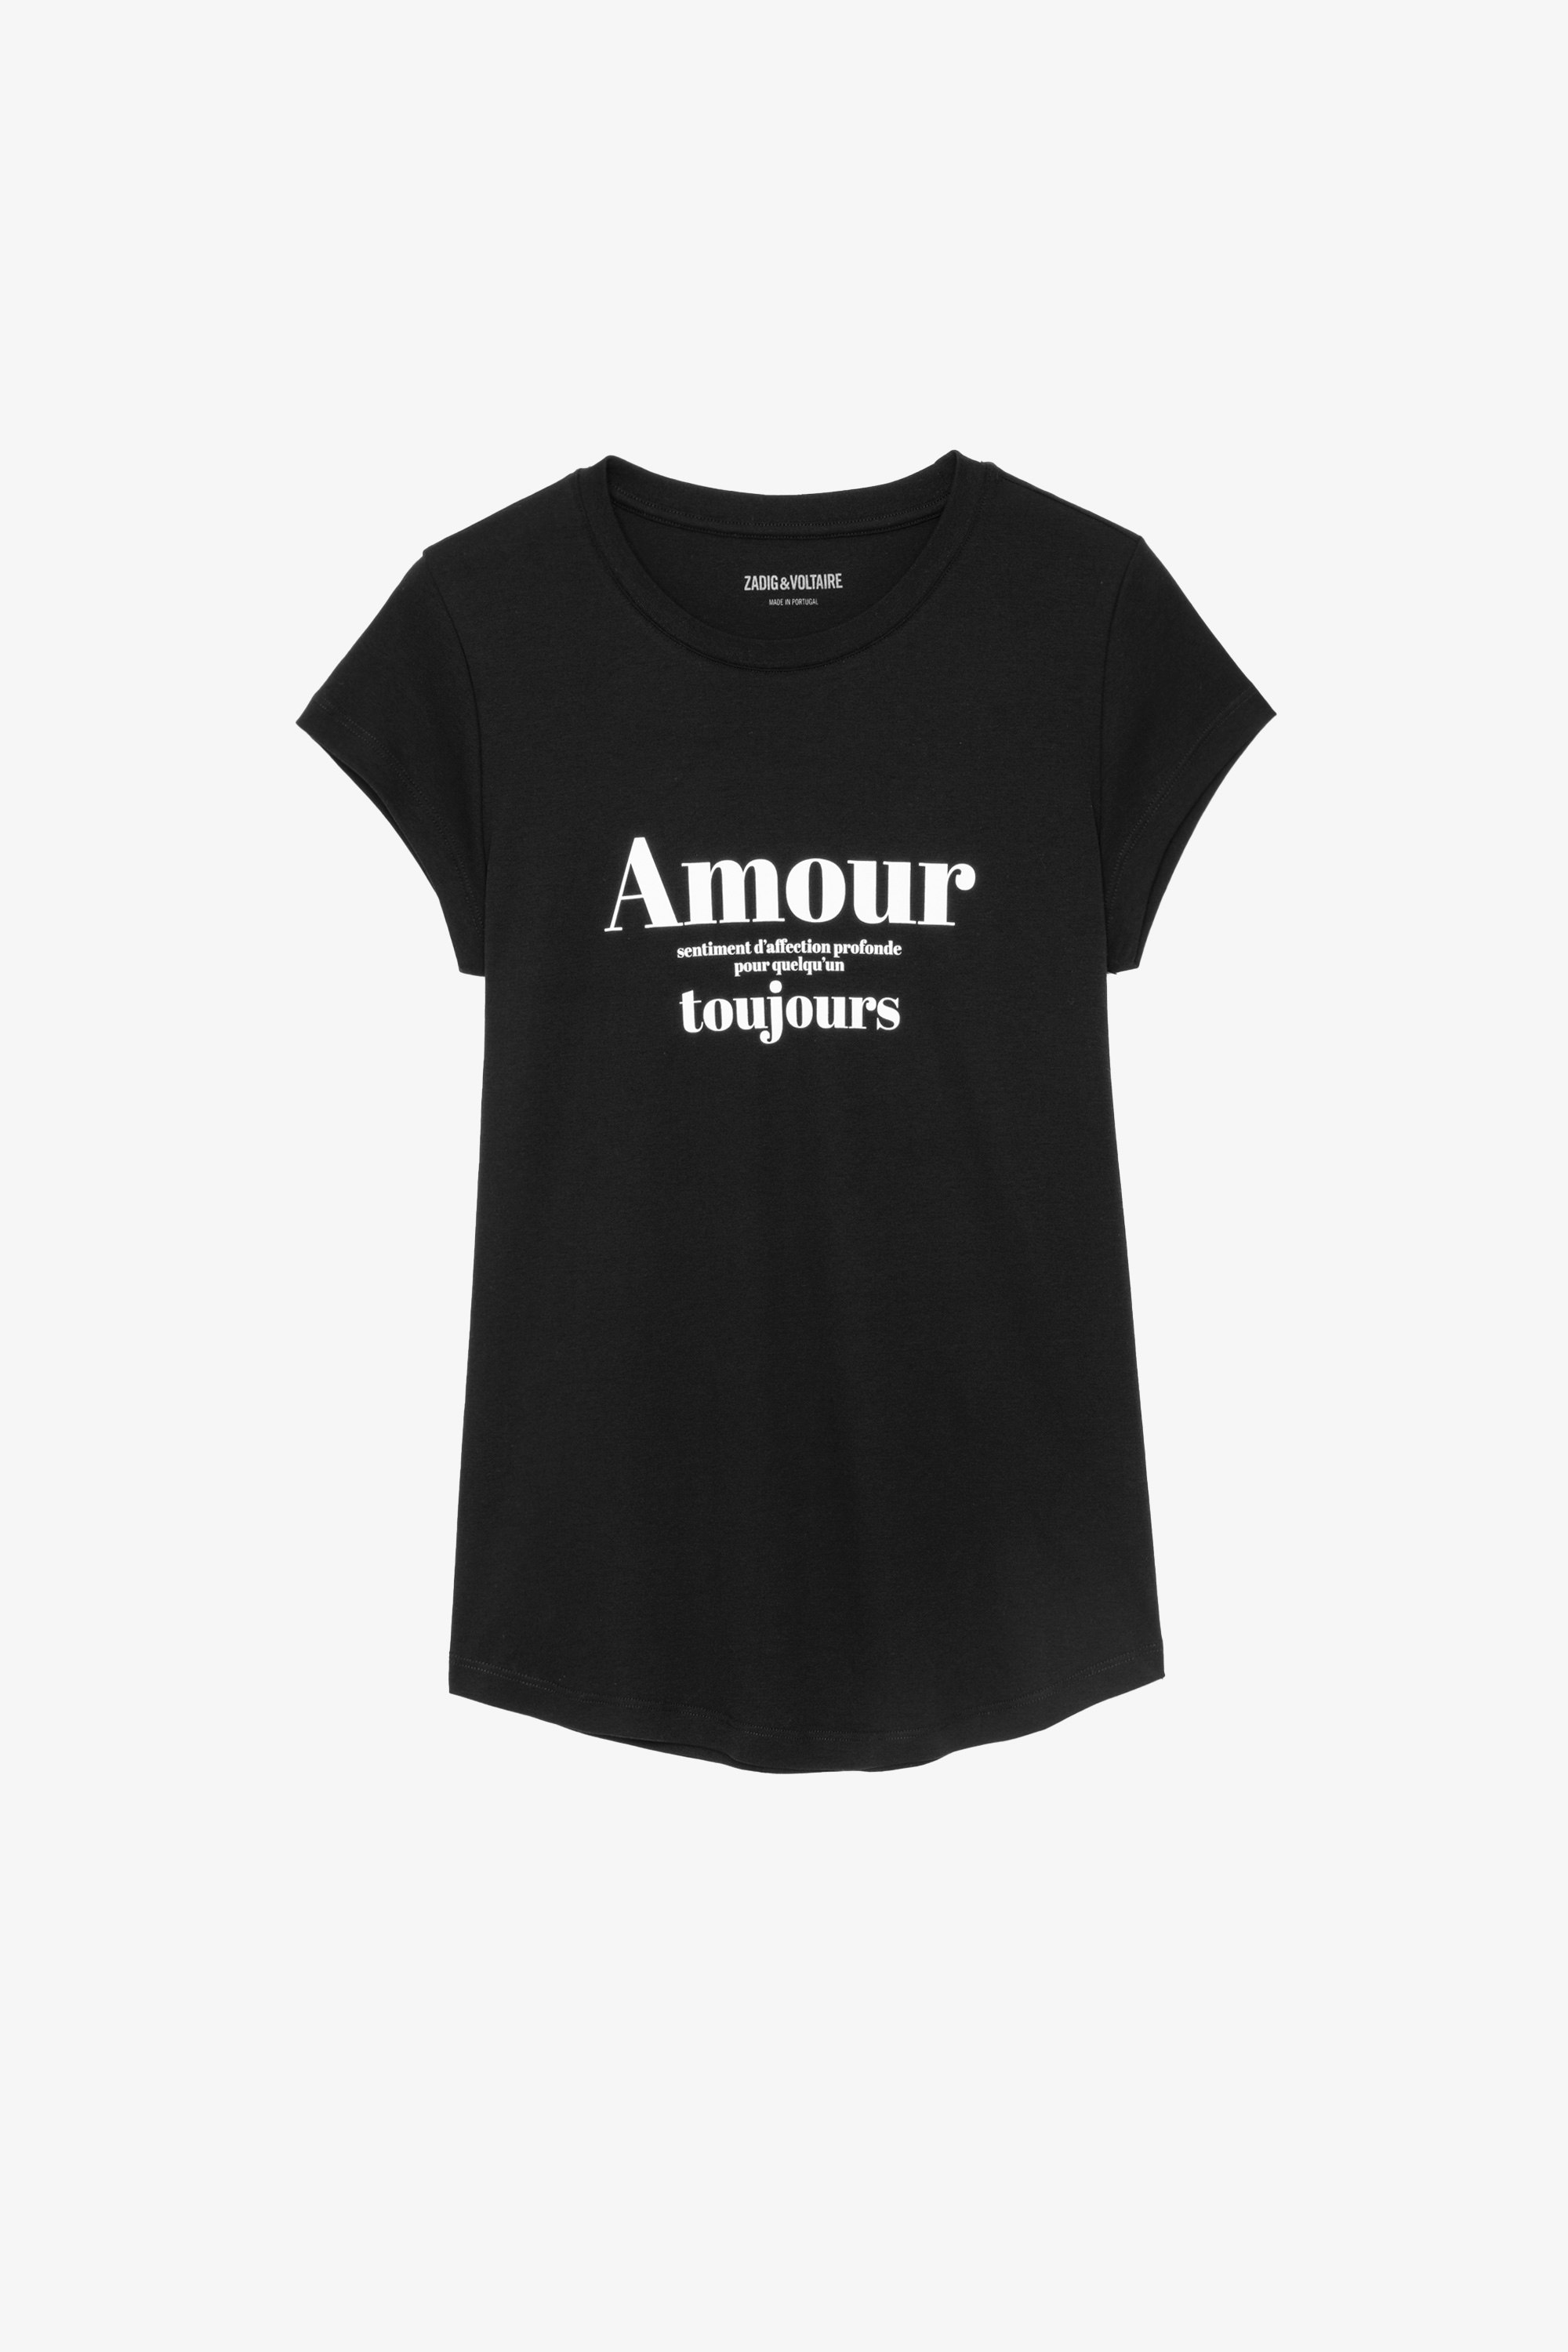 T-Shirt Skinny Amour Toujours Damen-T-Shirt aus schwarzer Baumwolle mit kontrastierendem Printmotiv „Amour Toujours“